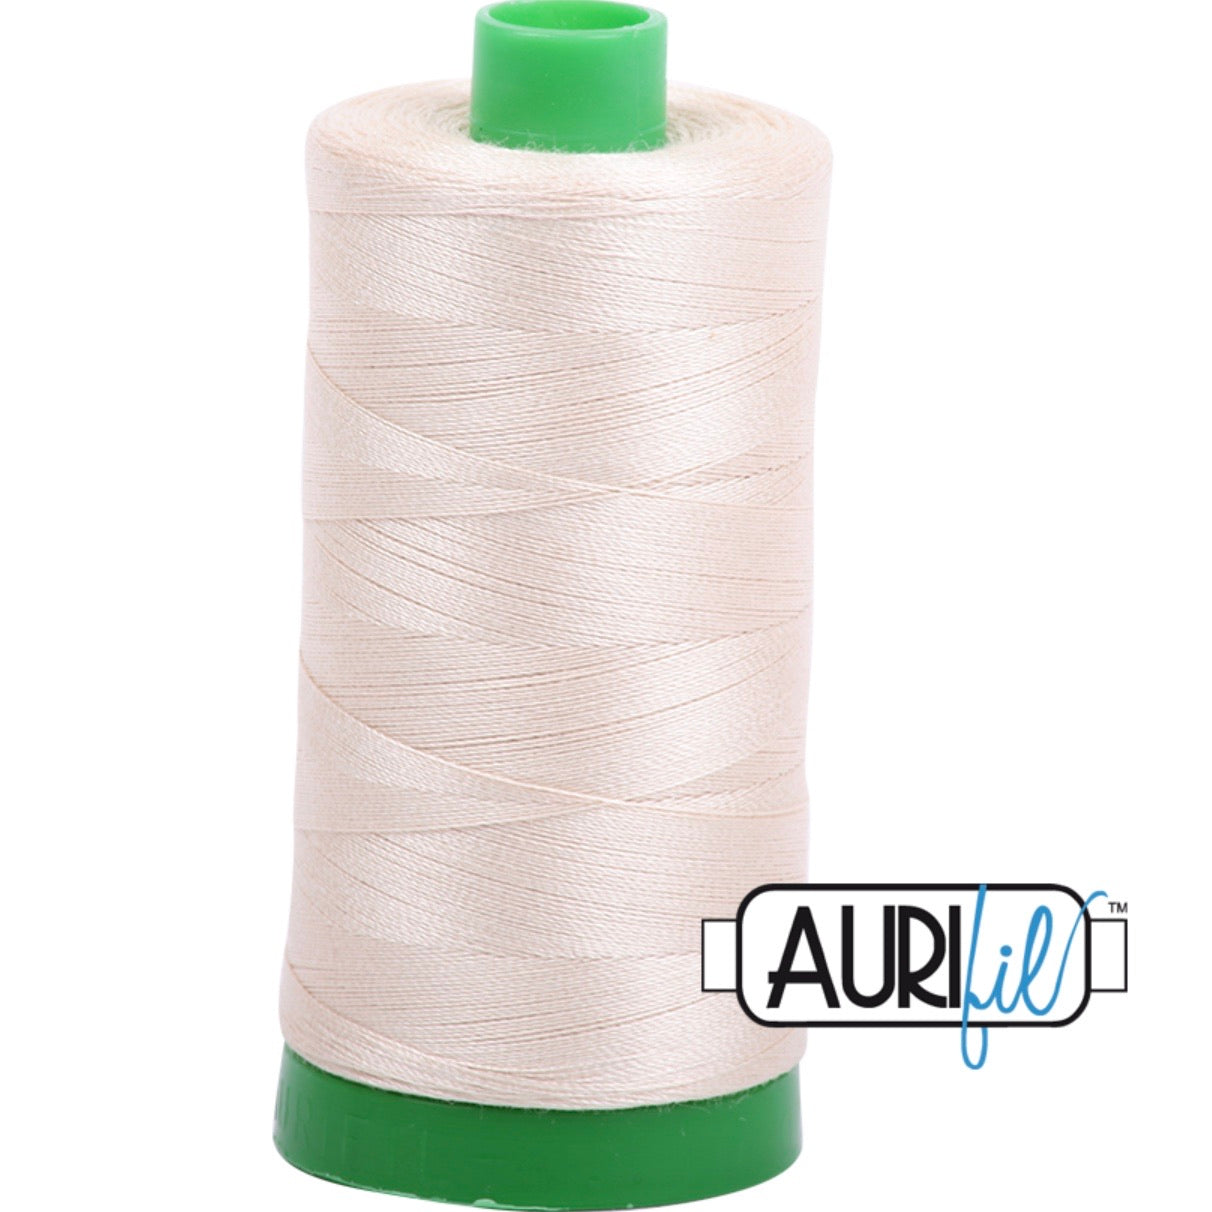 Aurifil Cotton 40wt Thread - 1000 mt - 2310 - Light Beige